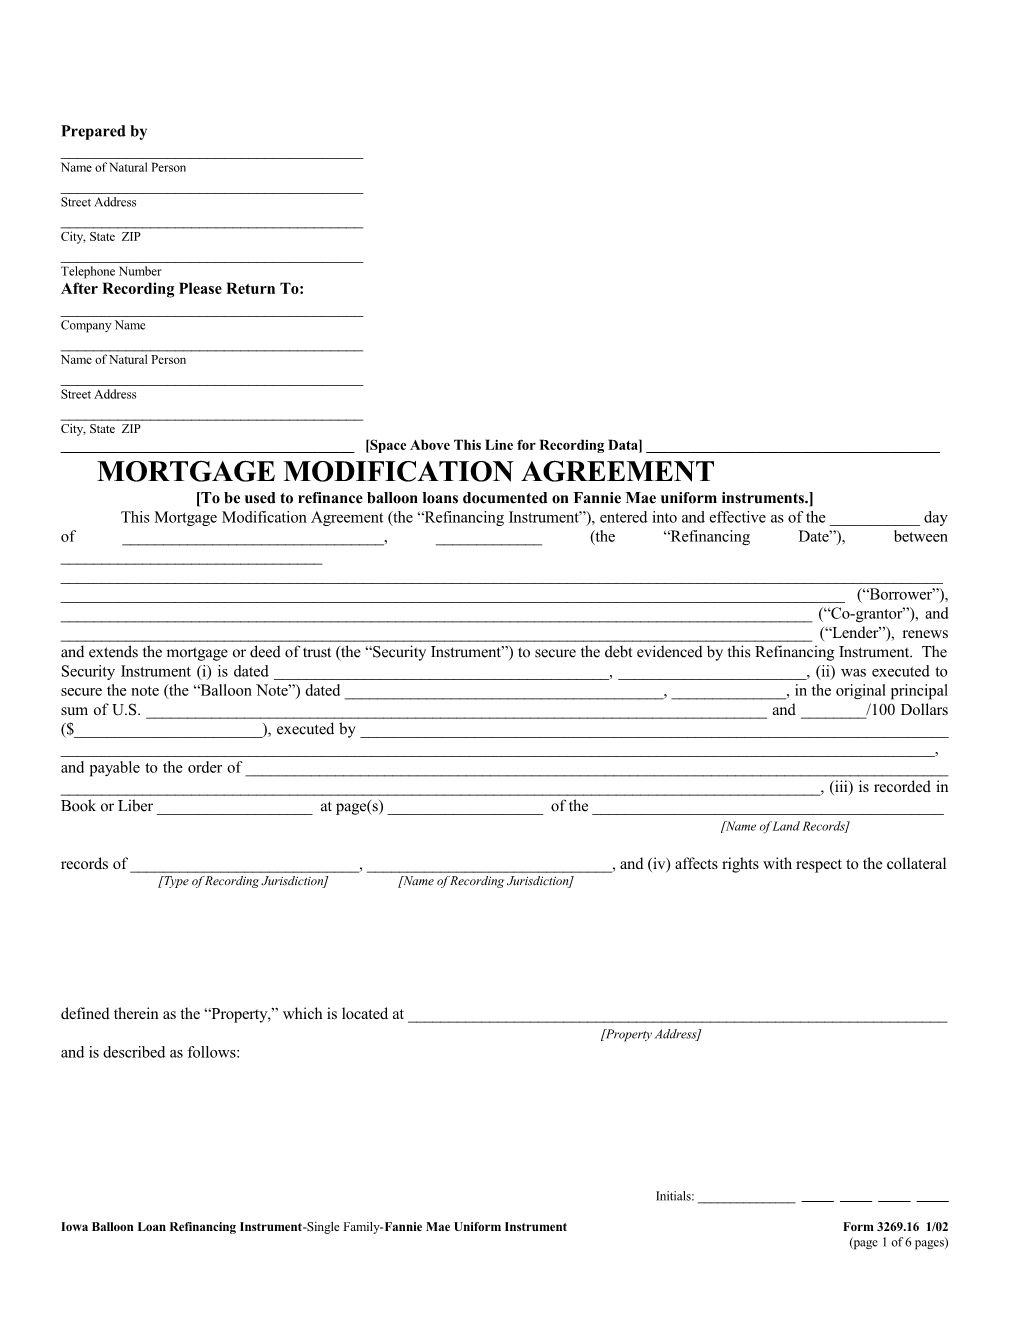 Iowa Balloon Loan Refinancing Instrument (Form 3269.16): Word